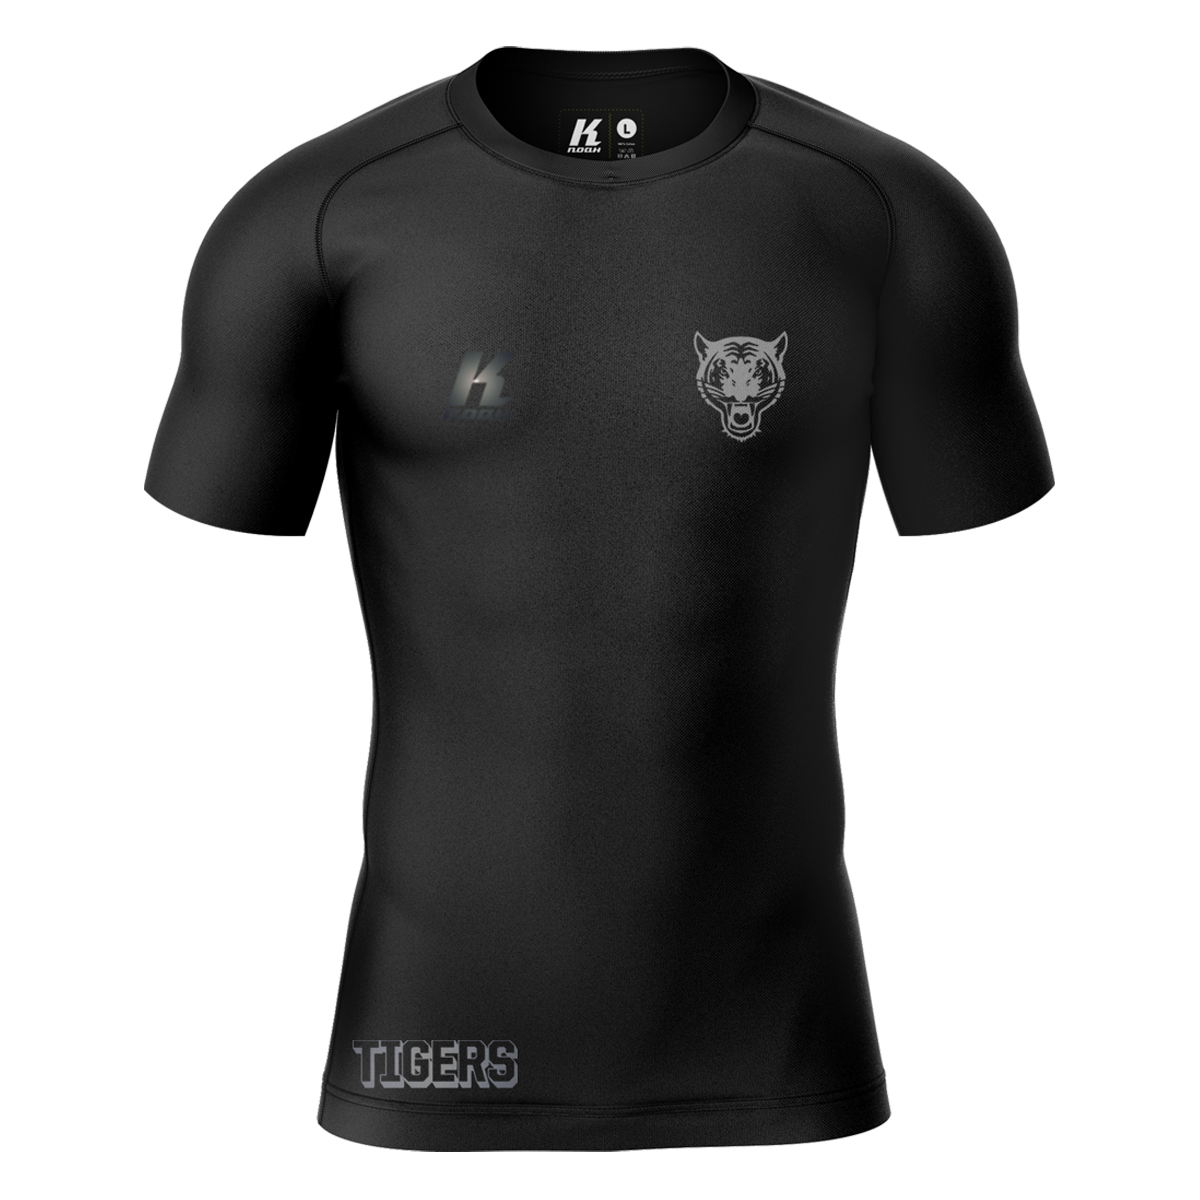 Tigers "Blackline" K.Tech Compression Shortsleeve Shirt